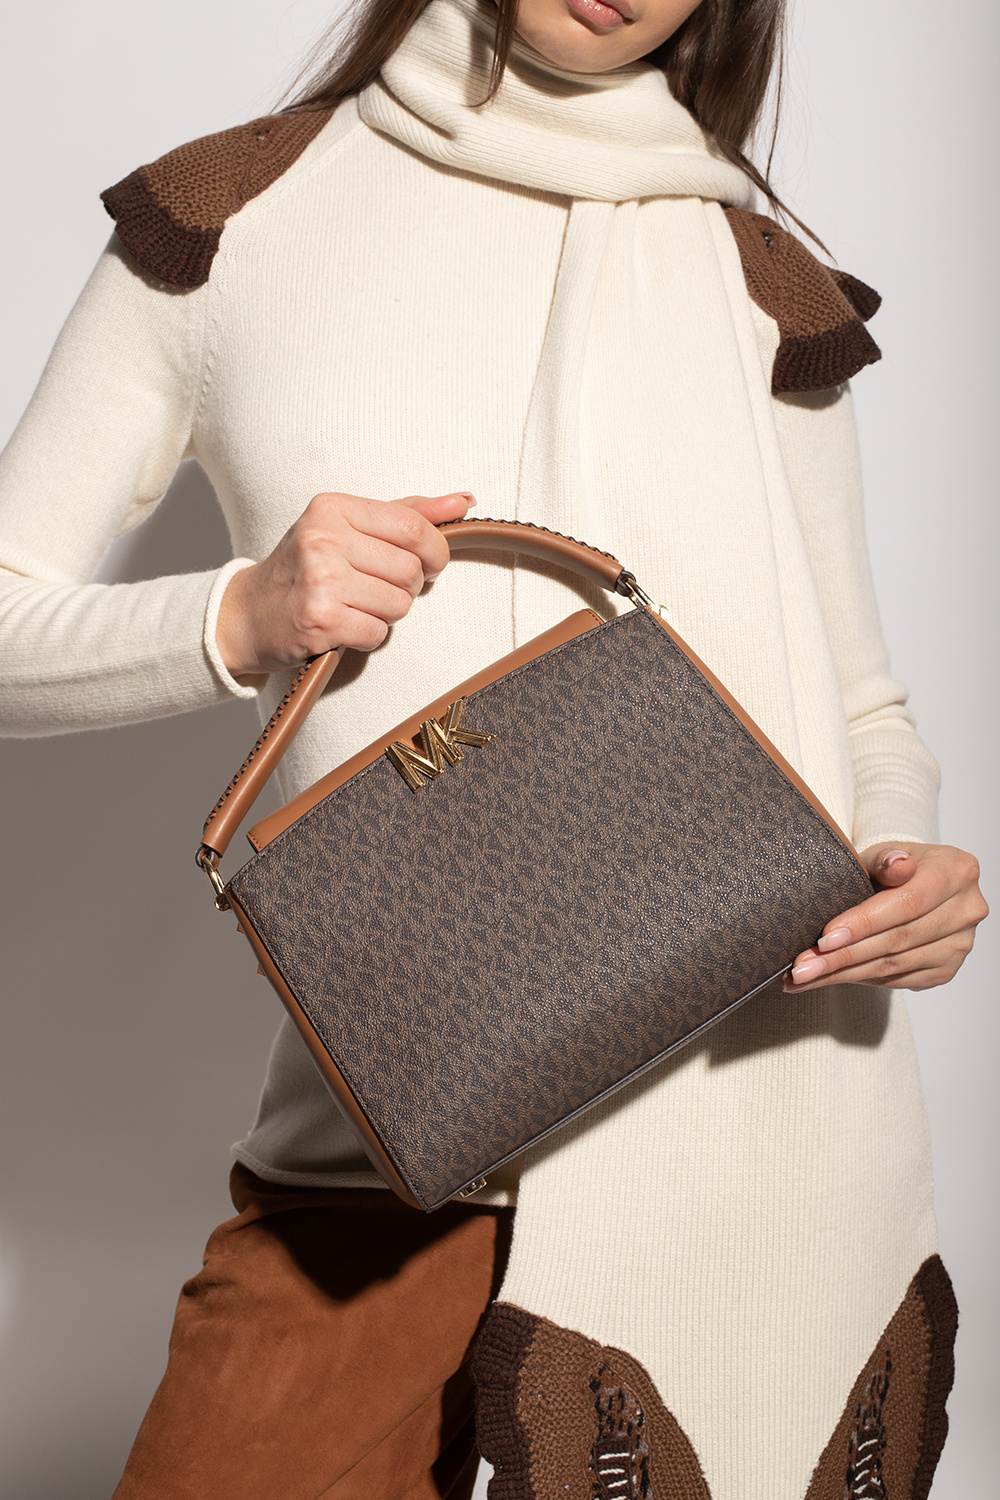 Michael Kors Karlie Bag An Alternative To The Louis Vuitton Capucines!  #michaelkors #louisvuitton 